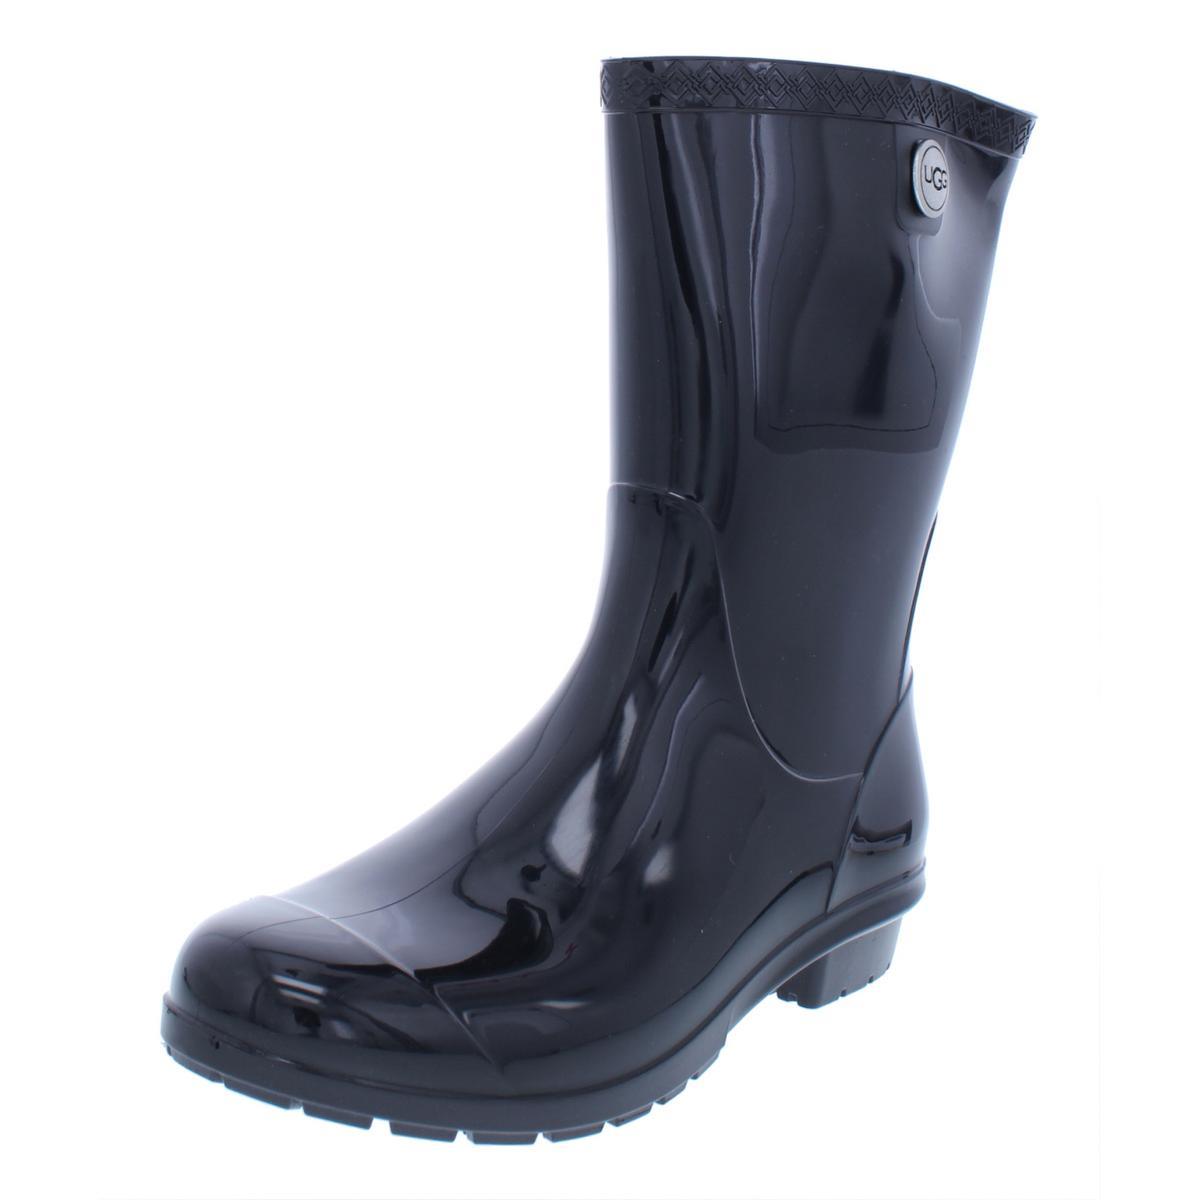 Ugg Womens Sienna Rubber Mid-calf Fashion Rain Boots Shoes Bhfo 9123 Black